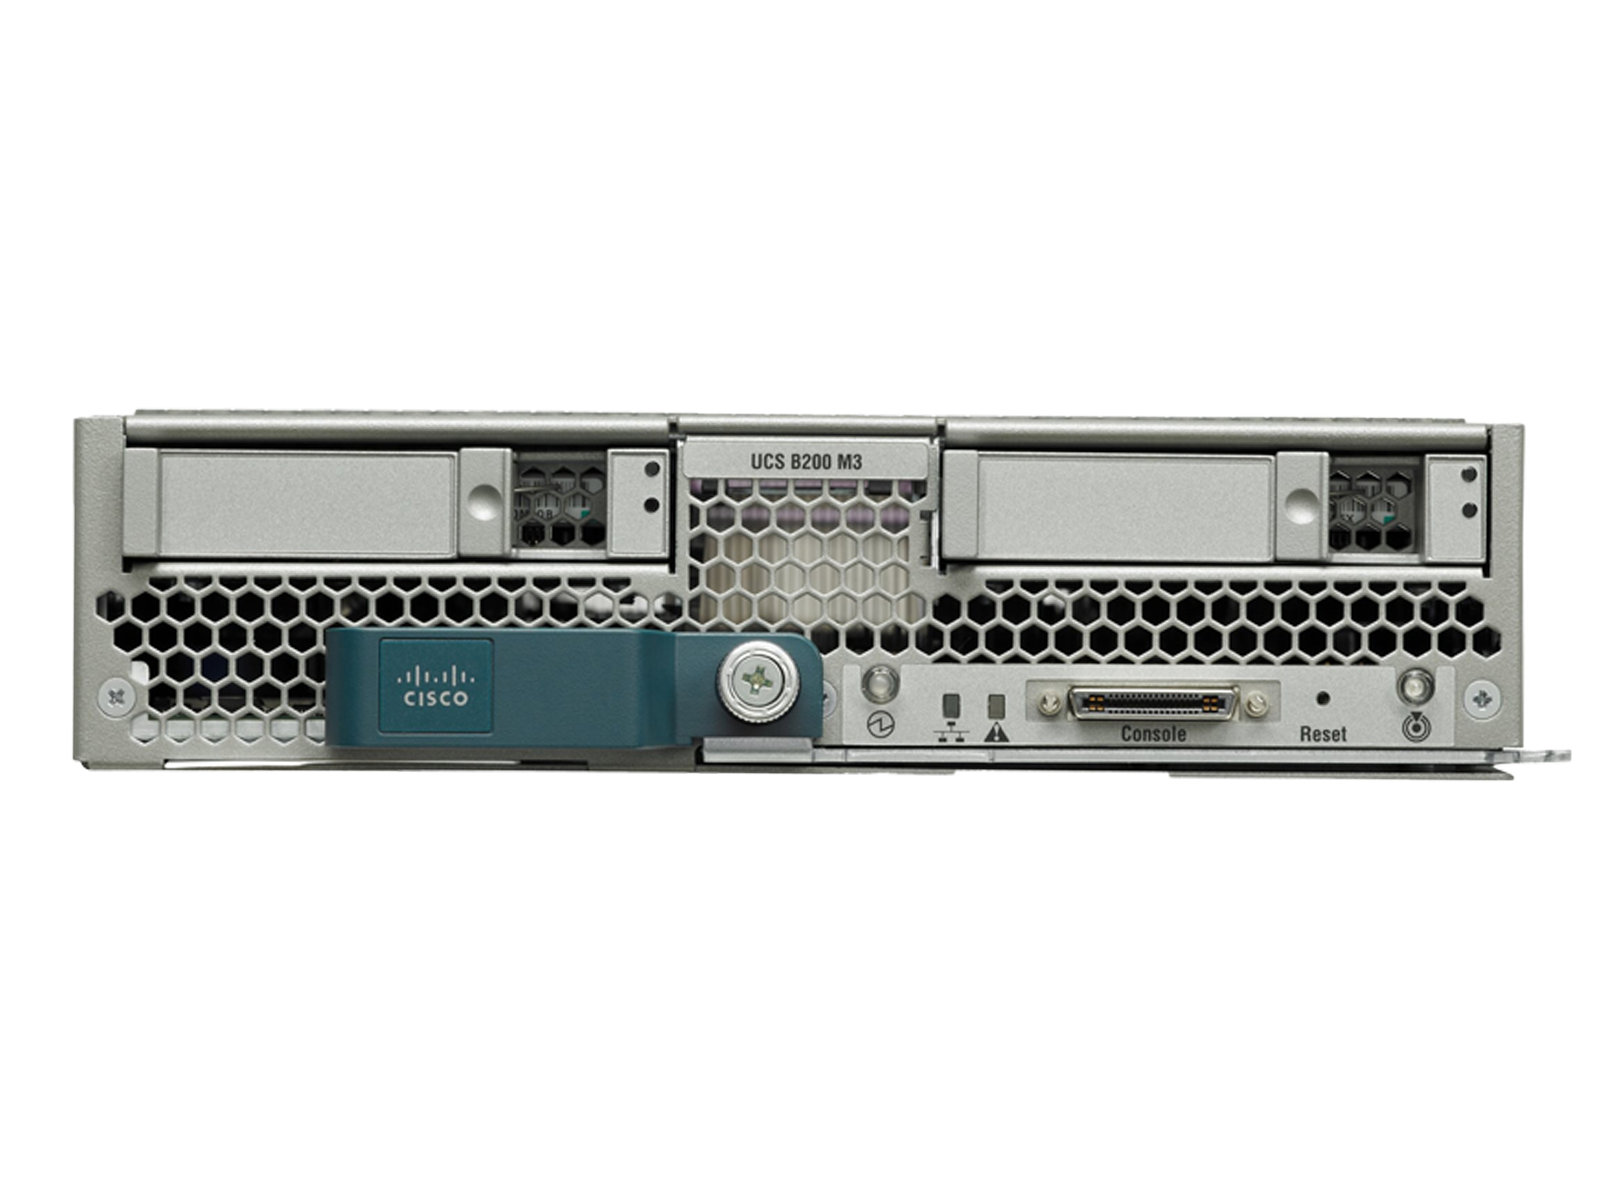 Lot of 8 Cisco B200 M3 16x E5-2670V2 1024GB Ram Blade Servers VIC1240 14900R